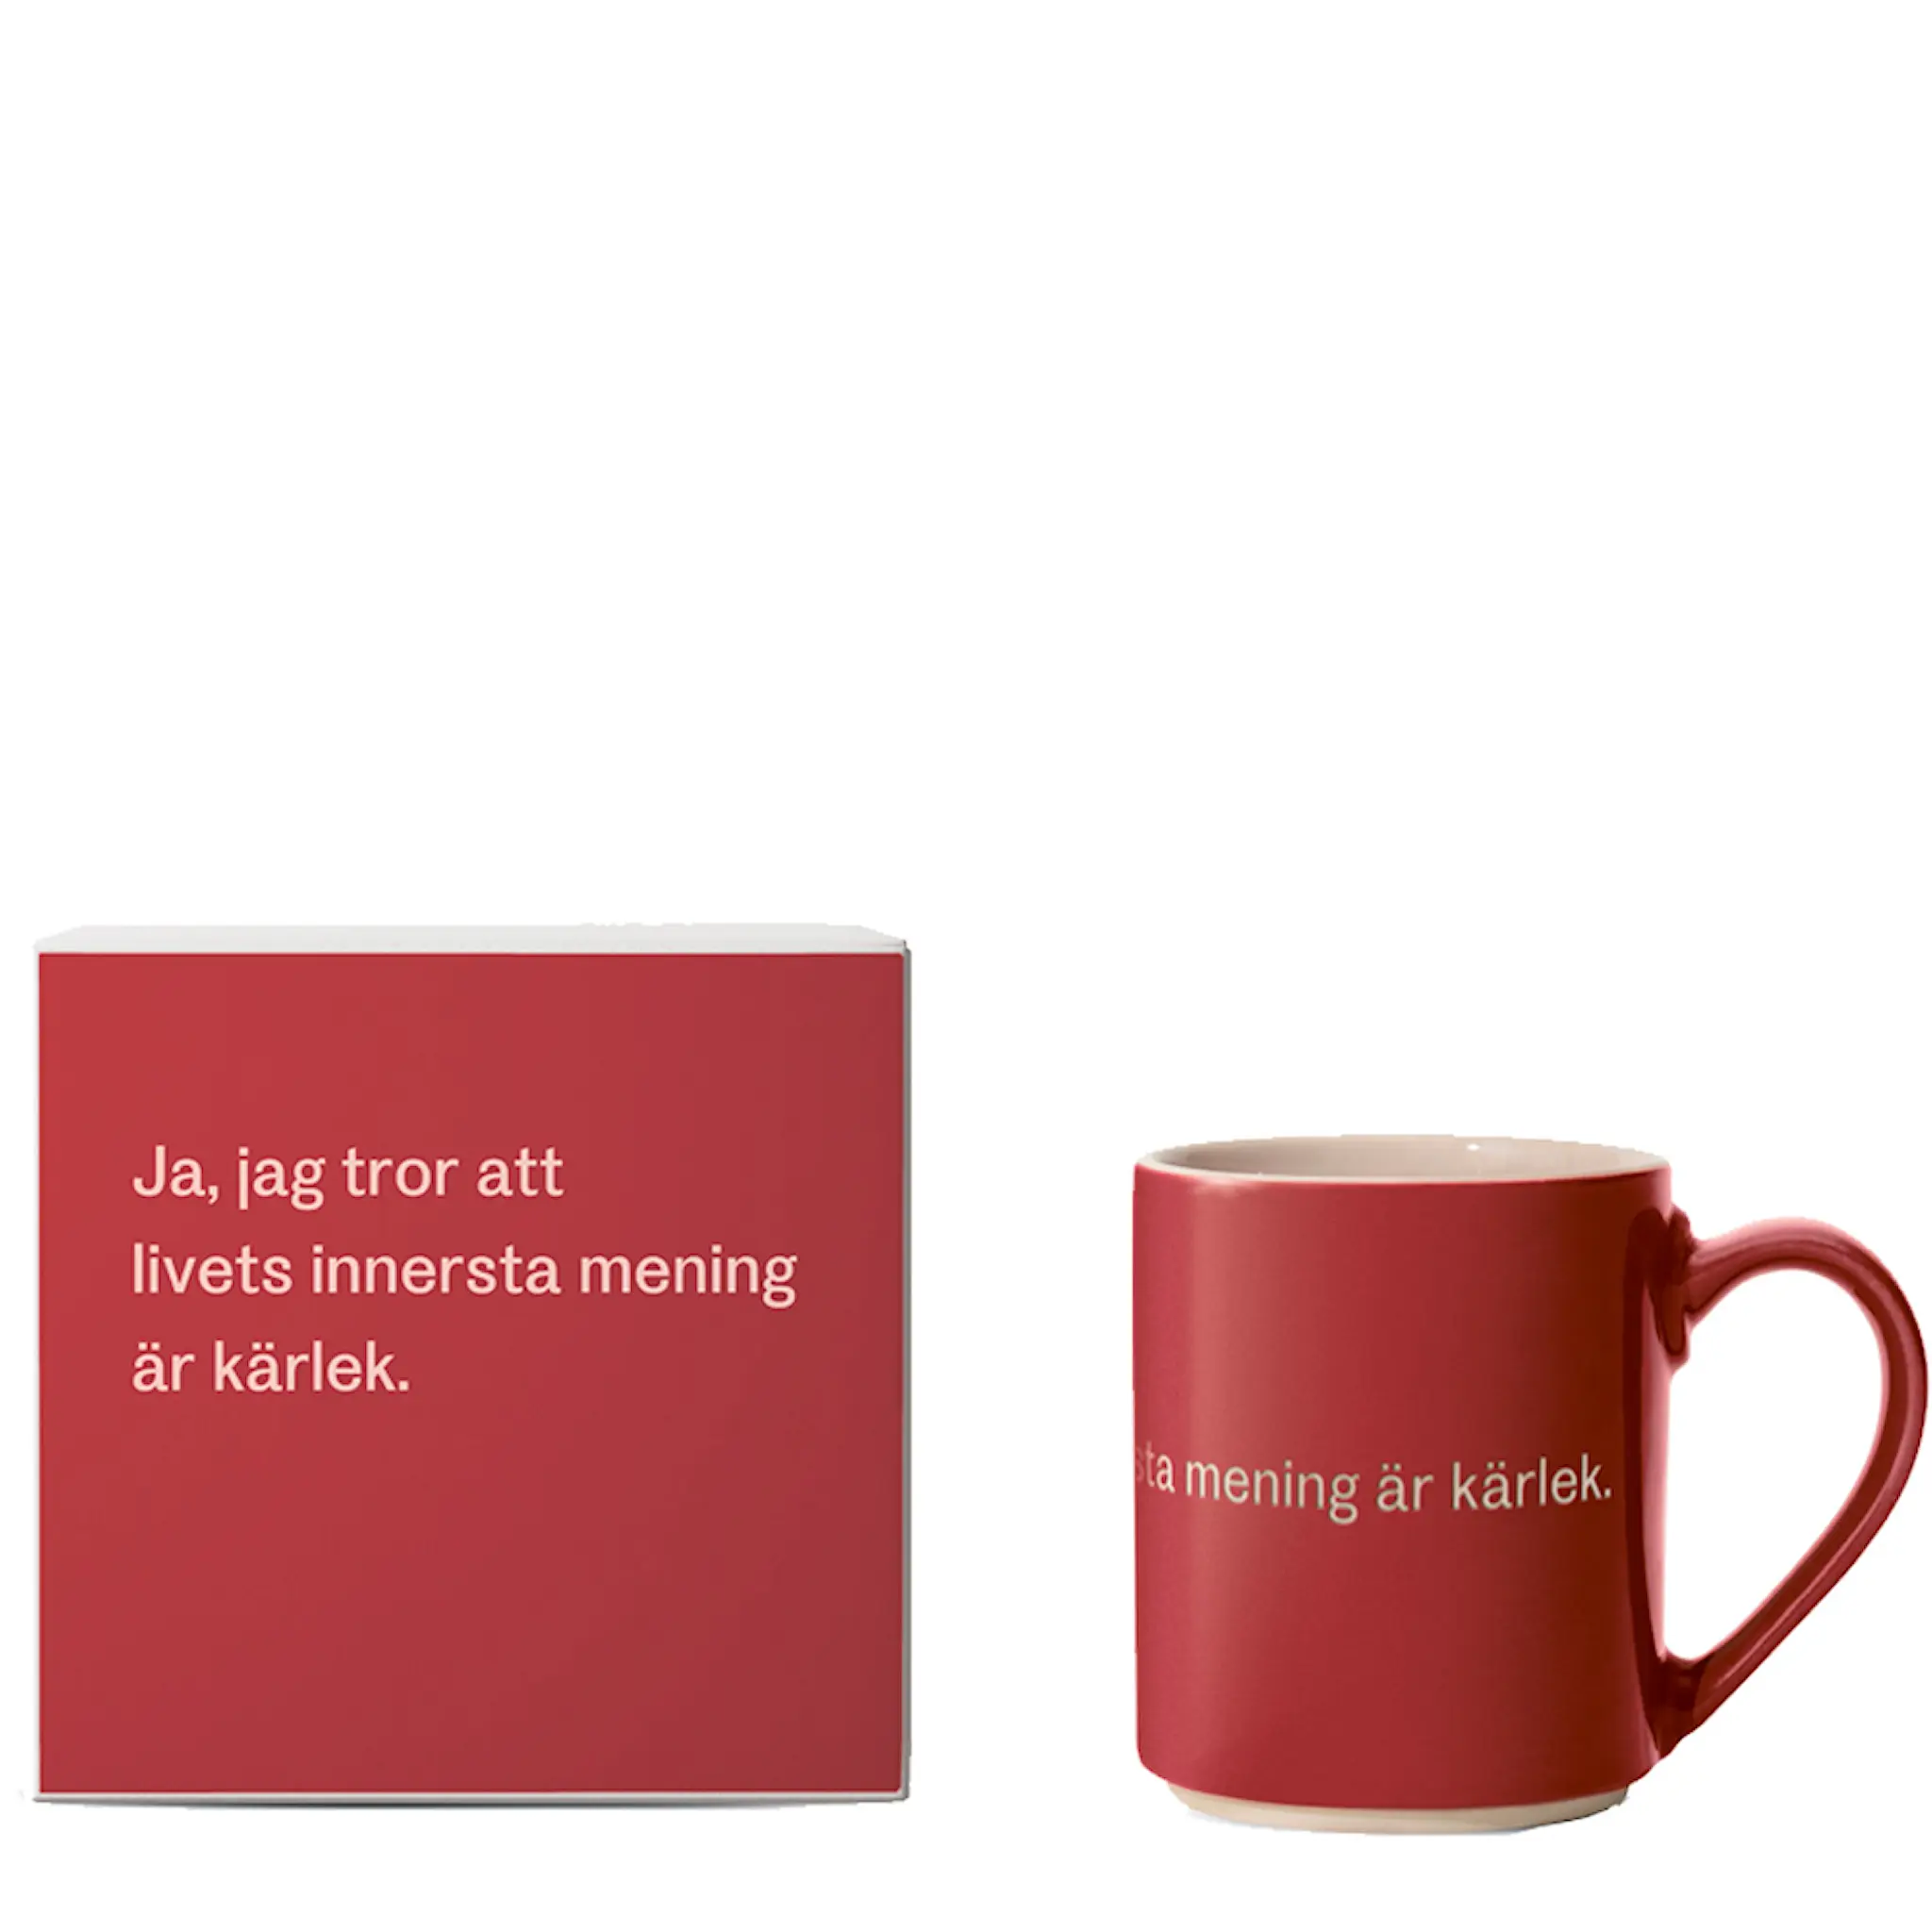 Design House Stockholm Astrid Lindgren krus ja, jag tror att livets innersta 35 cl rød